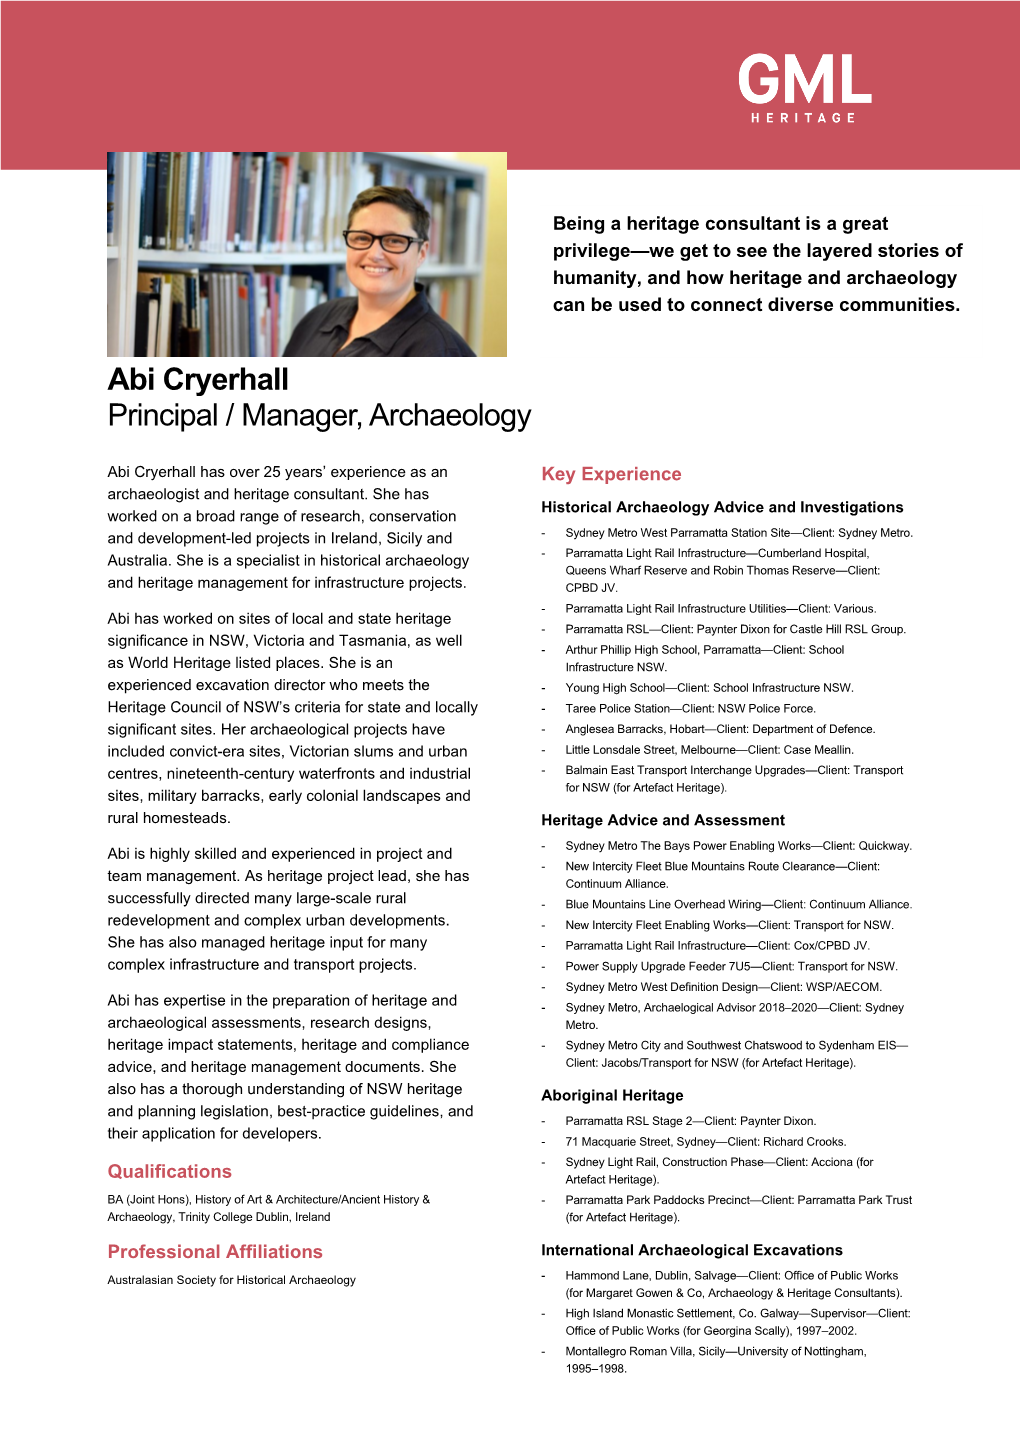 Abi Cryerhall Principal / Manager, Archaeology